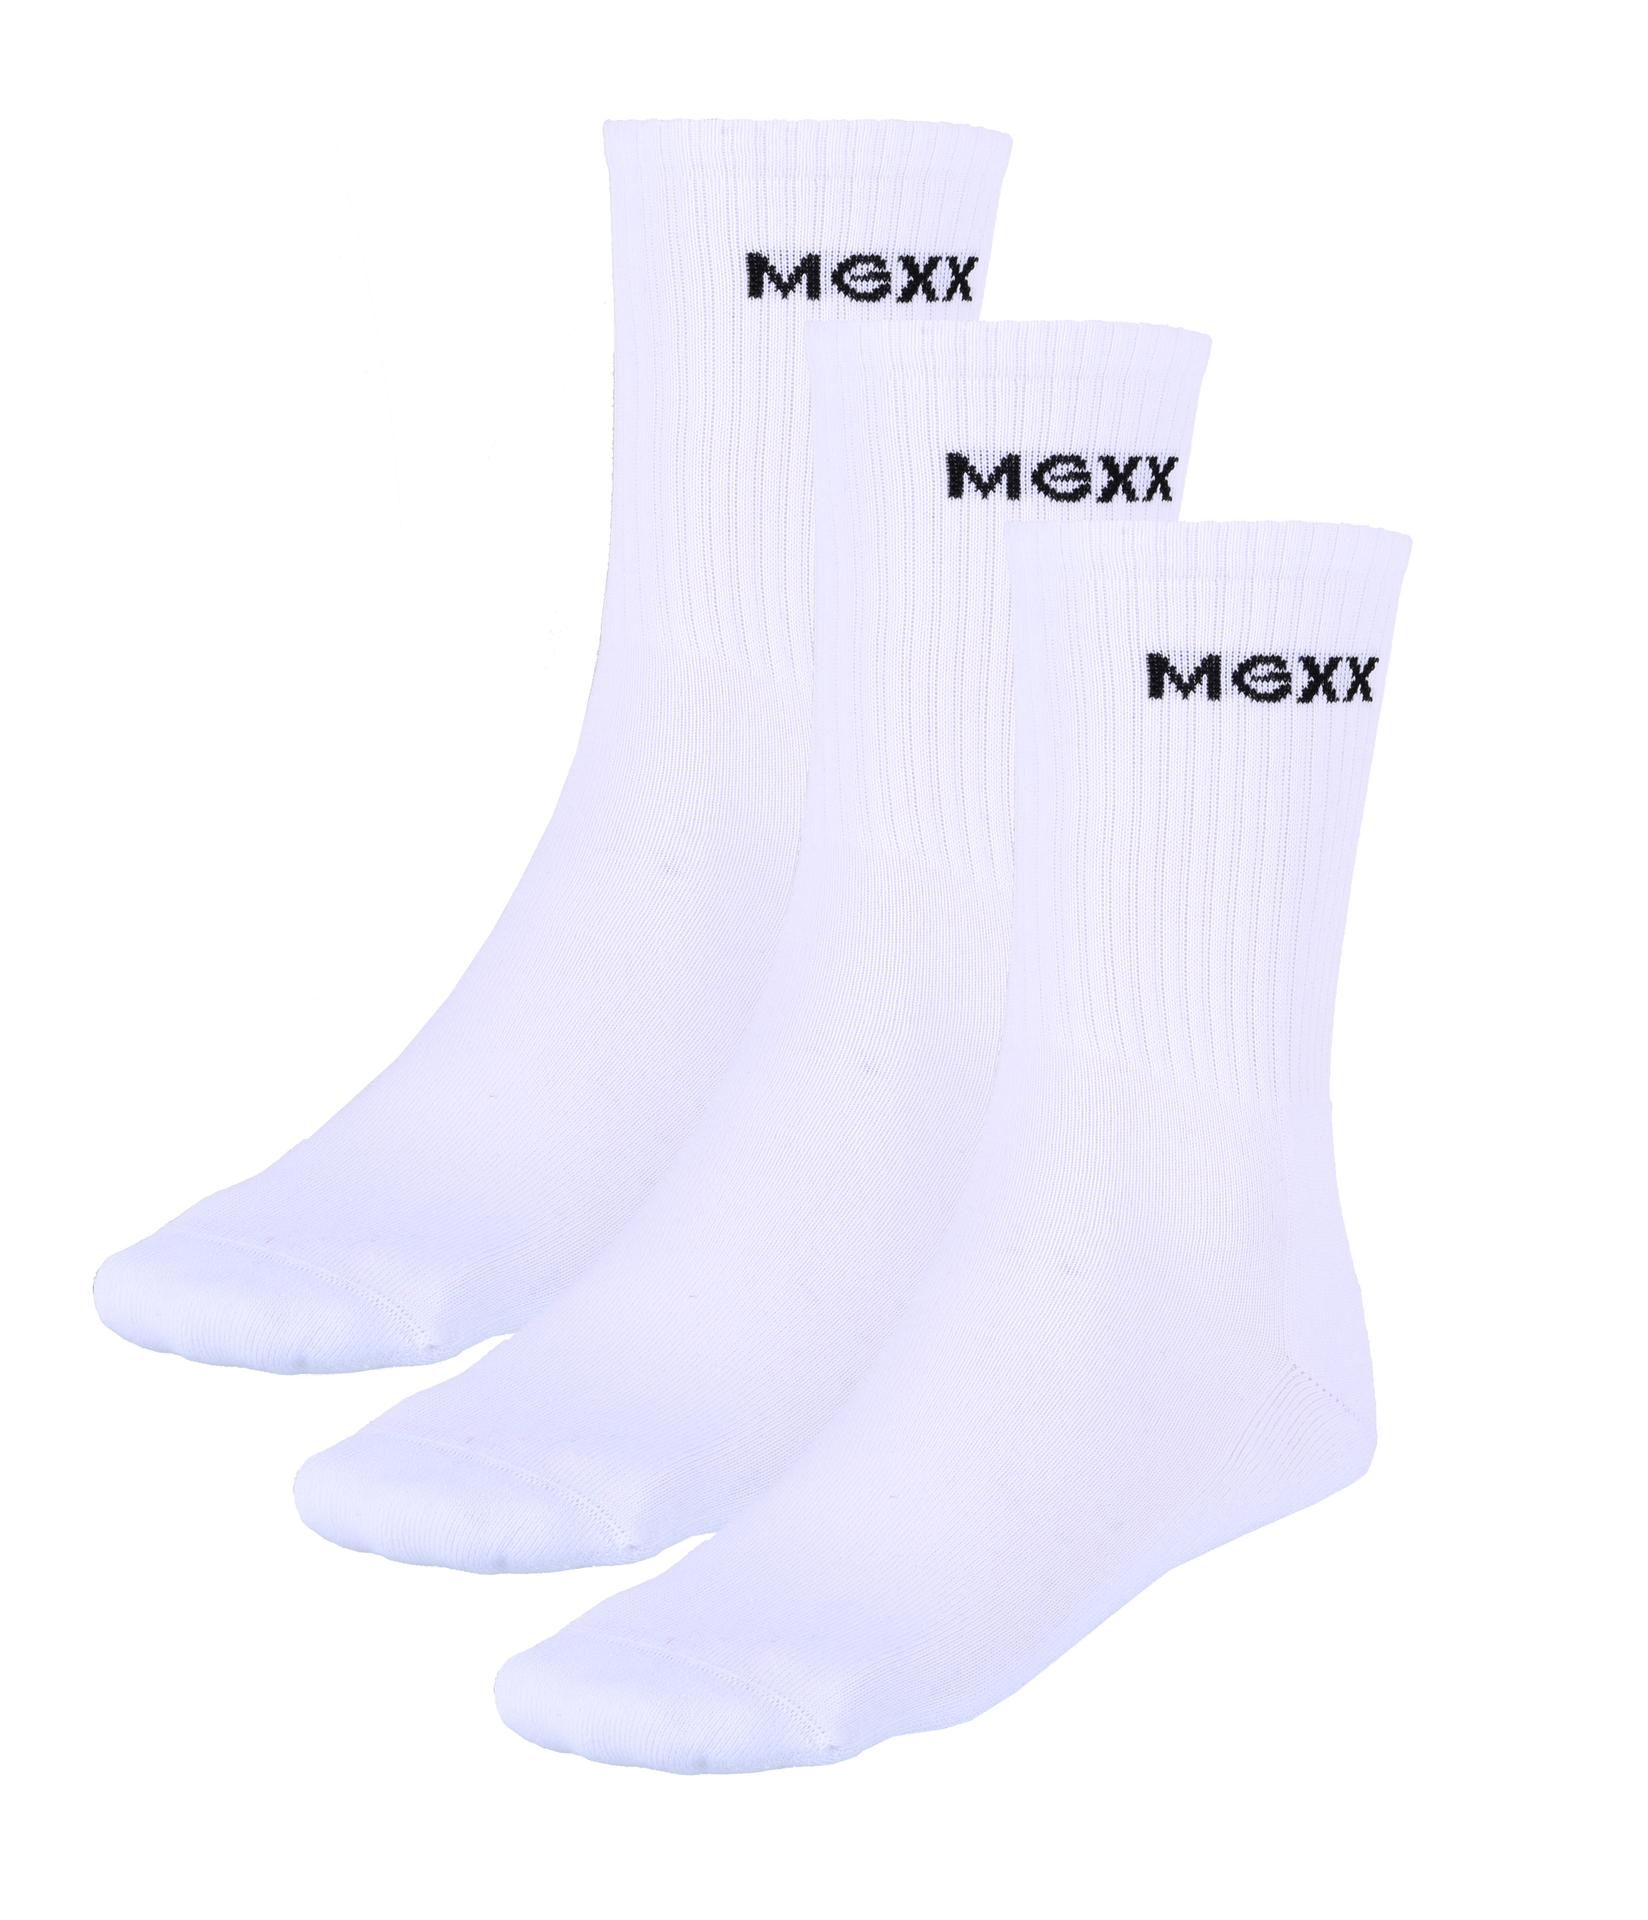 MEXX Sportske čarape, Pakovanje od 3 para, Bele